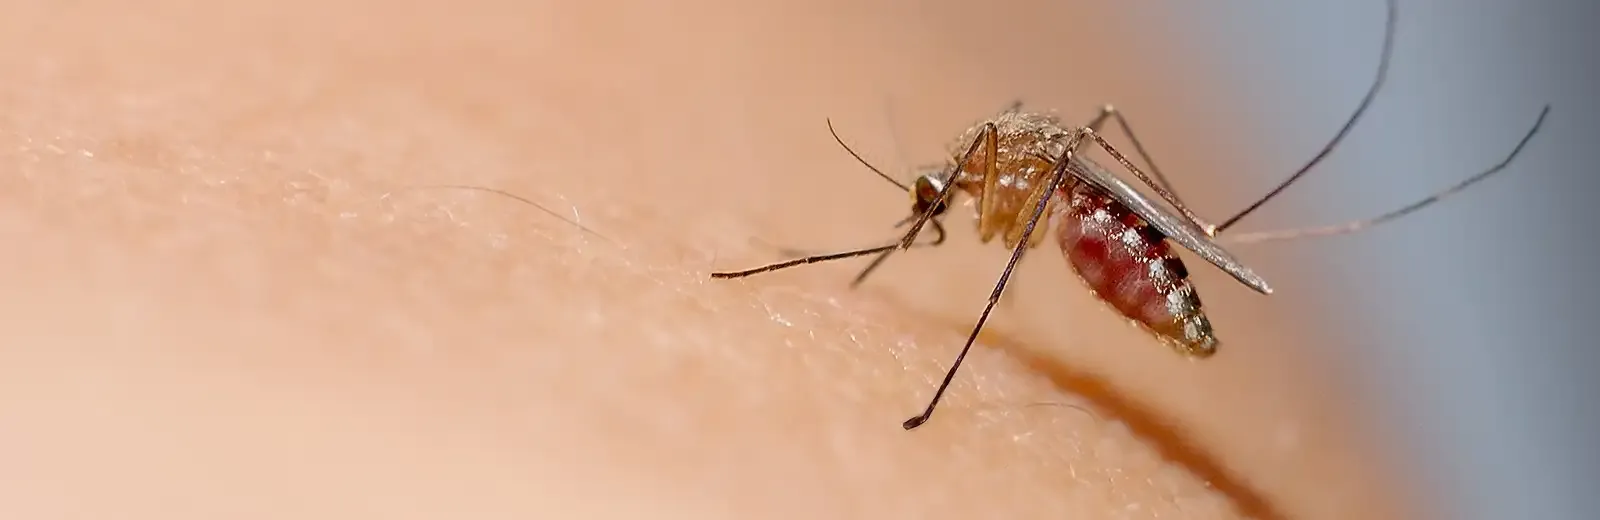 mosquito landing on someone's arm